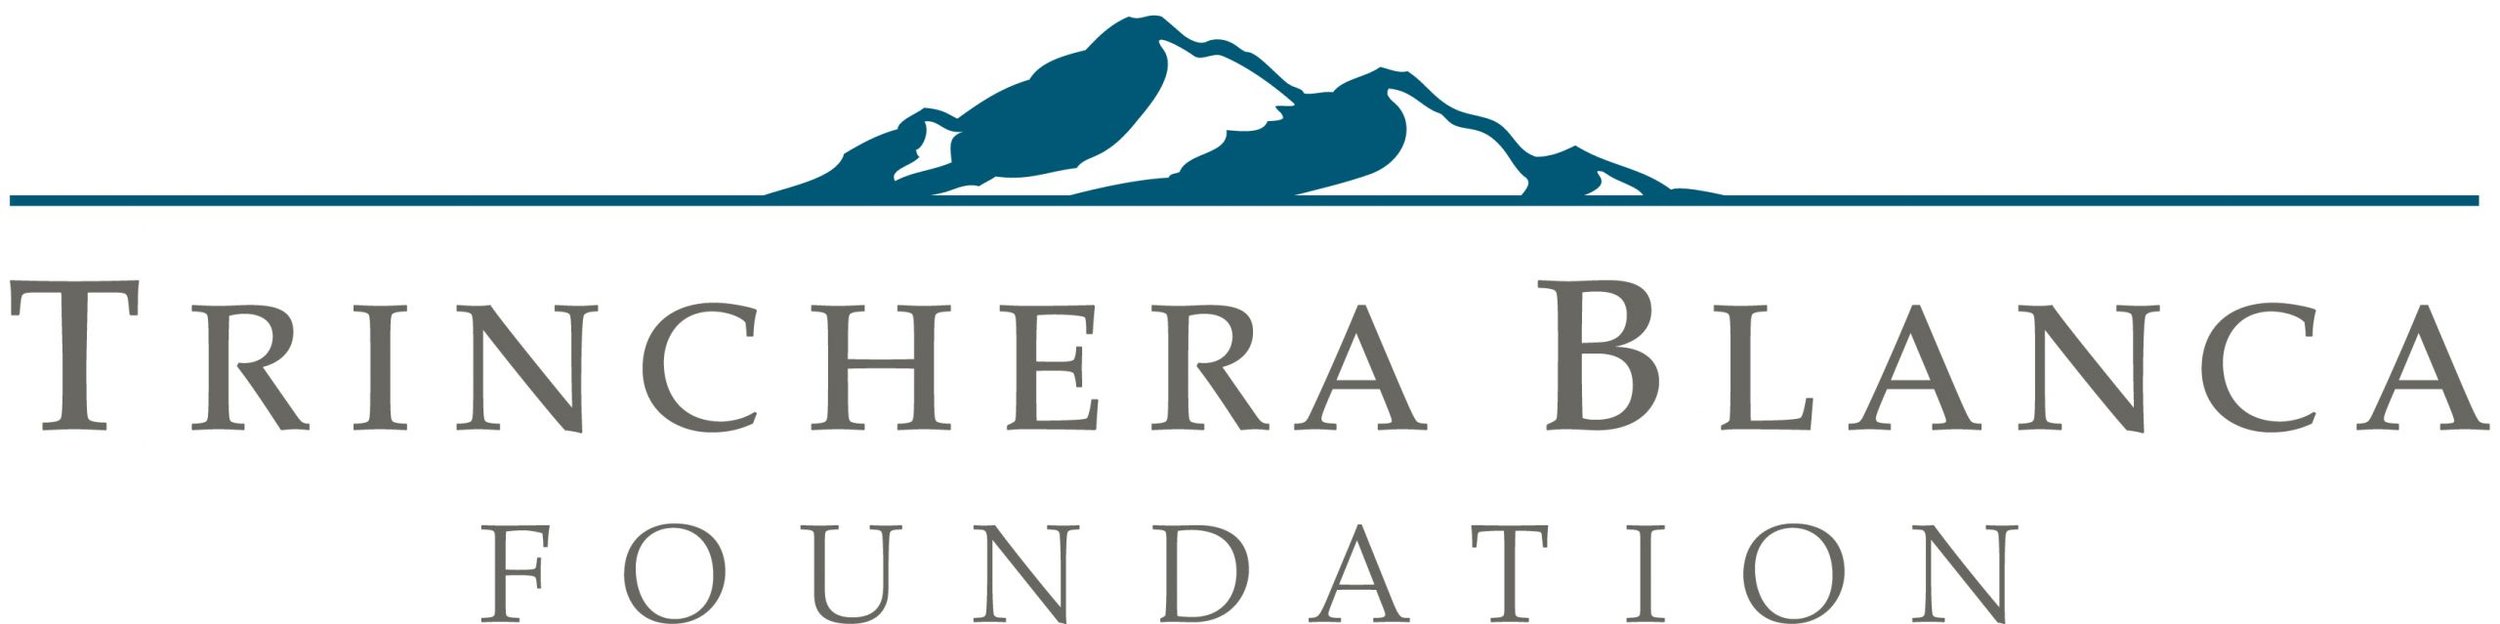 Trinchera_Blanca_Foundation_logo-scaled.jpg